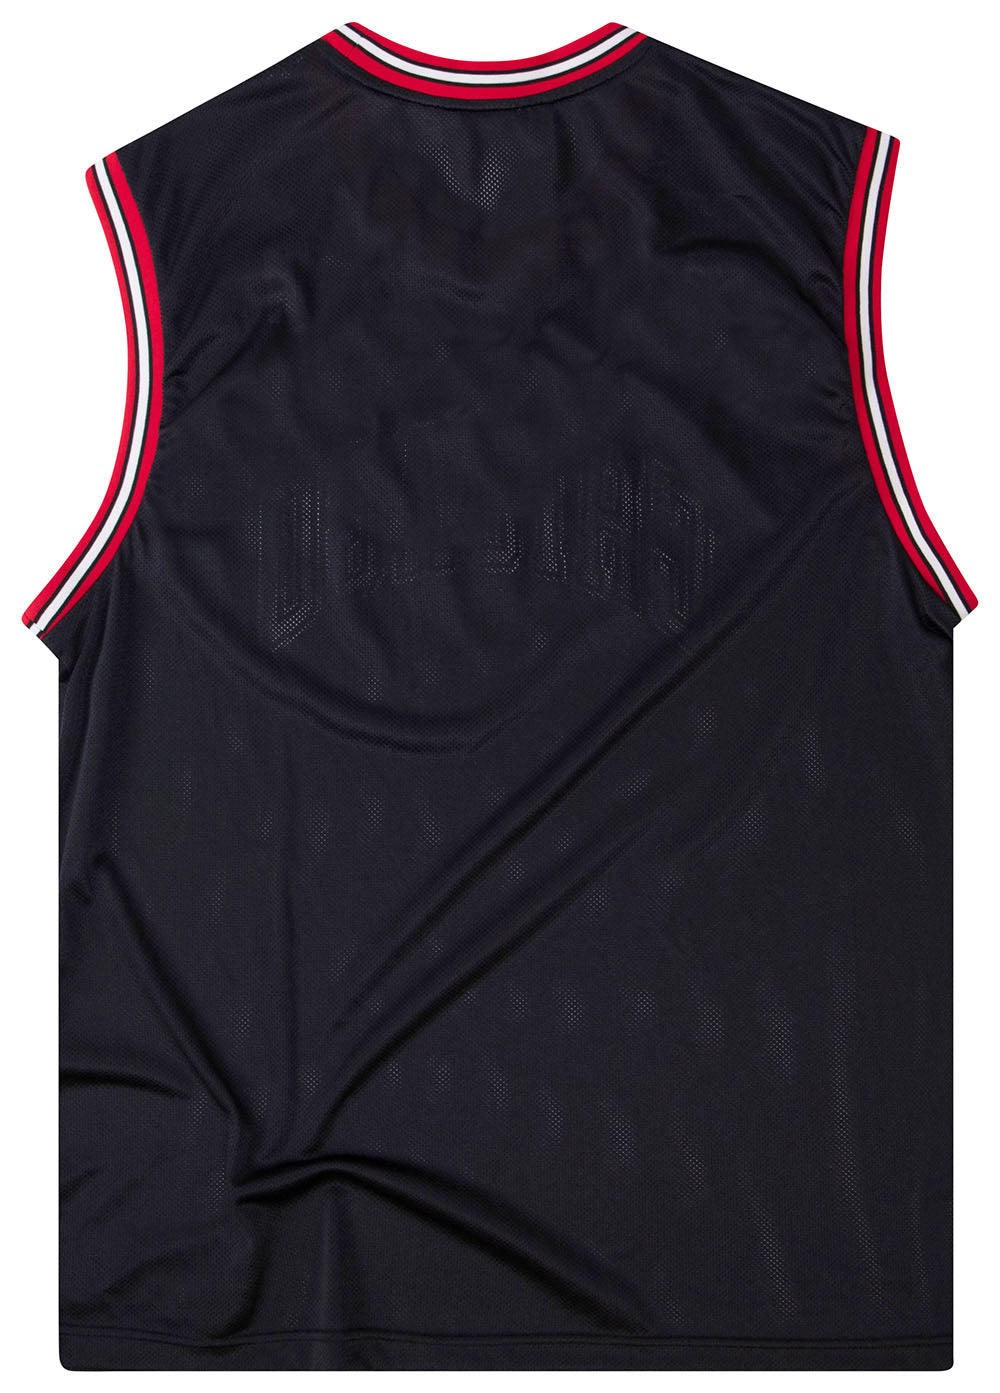 Bulls' leaked alternate jersey design features Chicago symbols aplenty –  NBC Sports Chicago